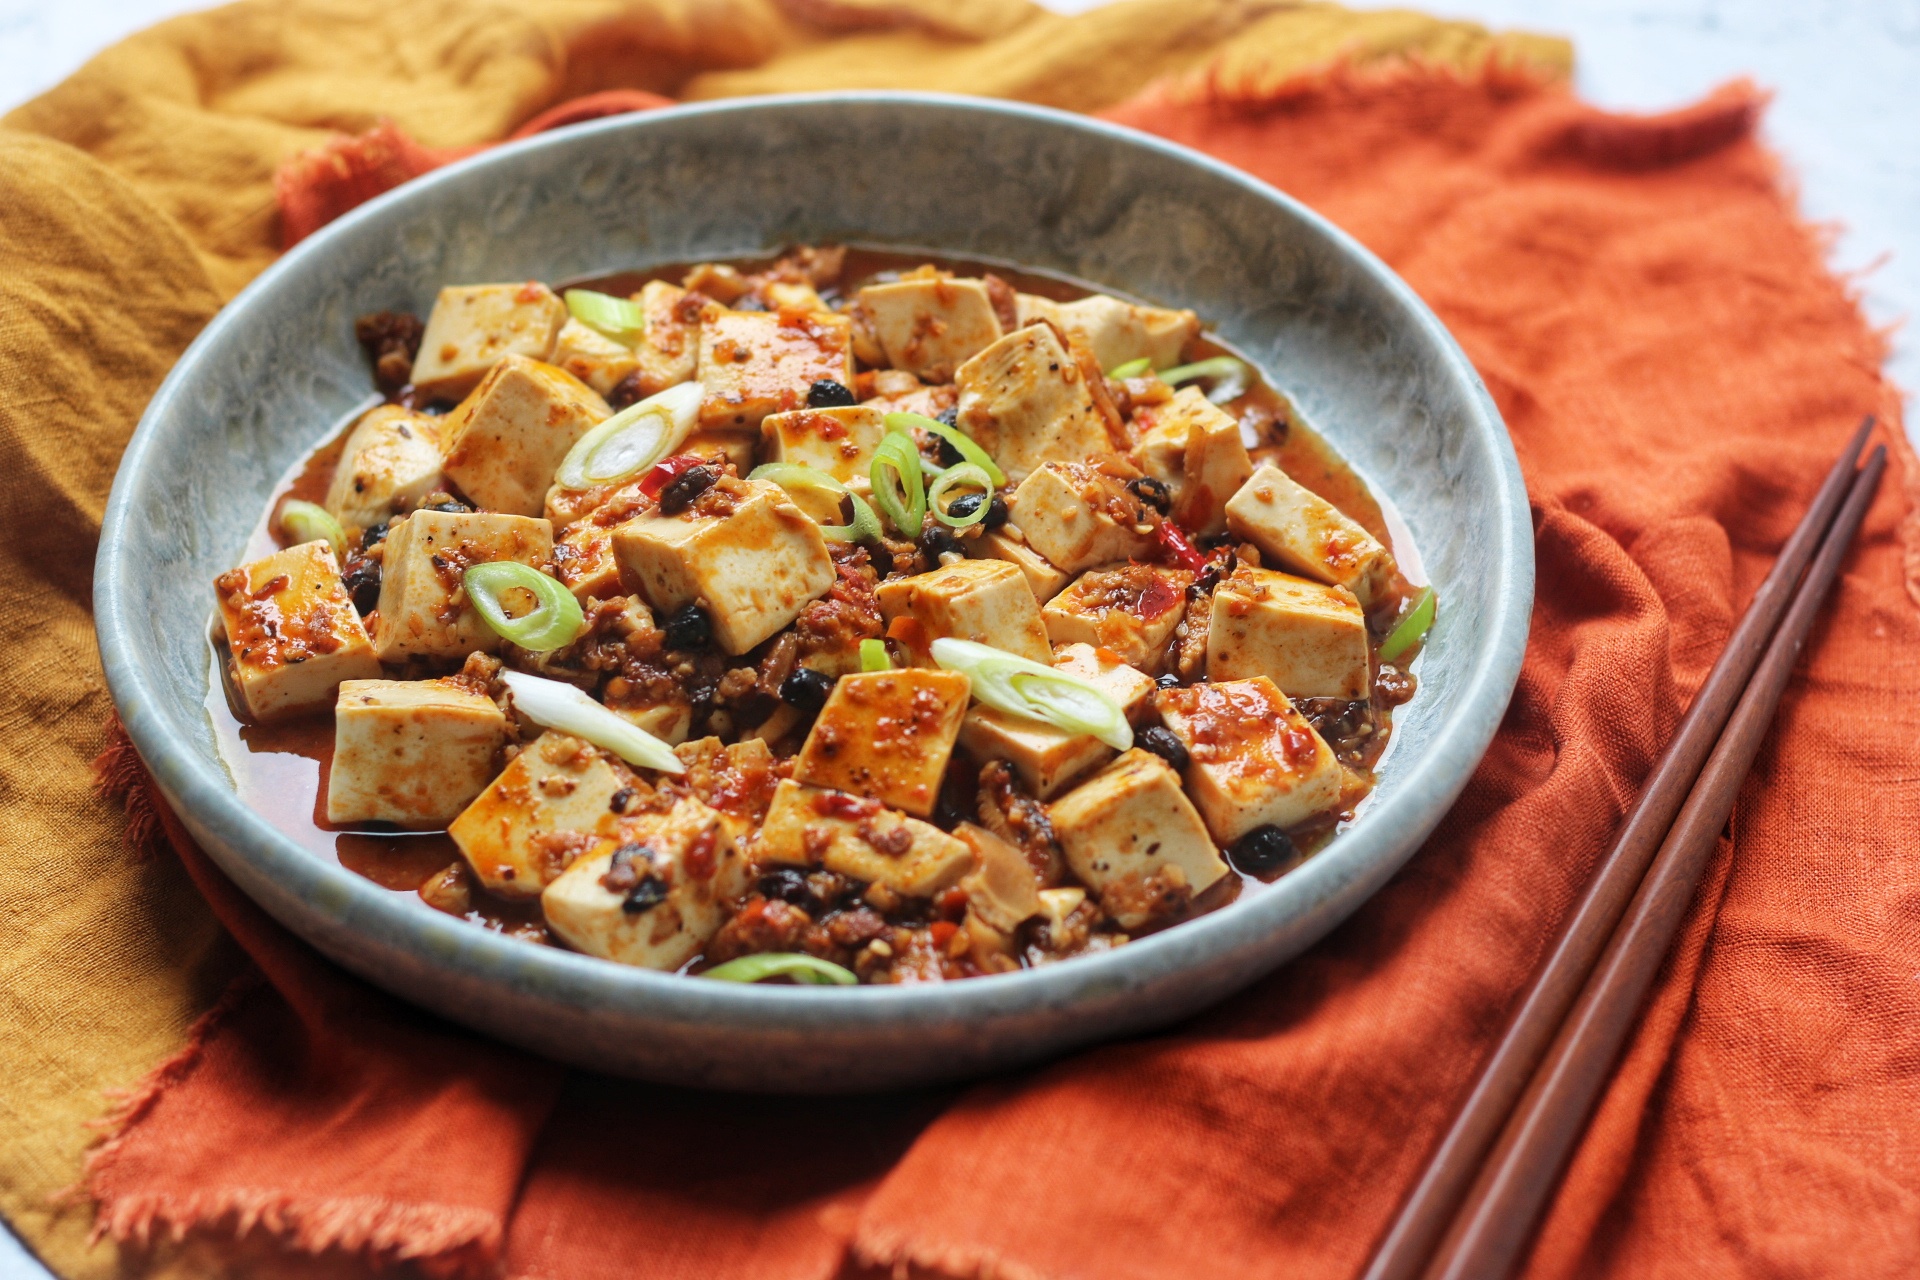 Vegan Mapo Tofu with shitake mushroom